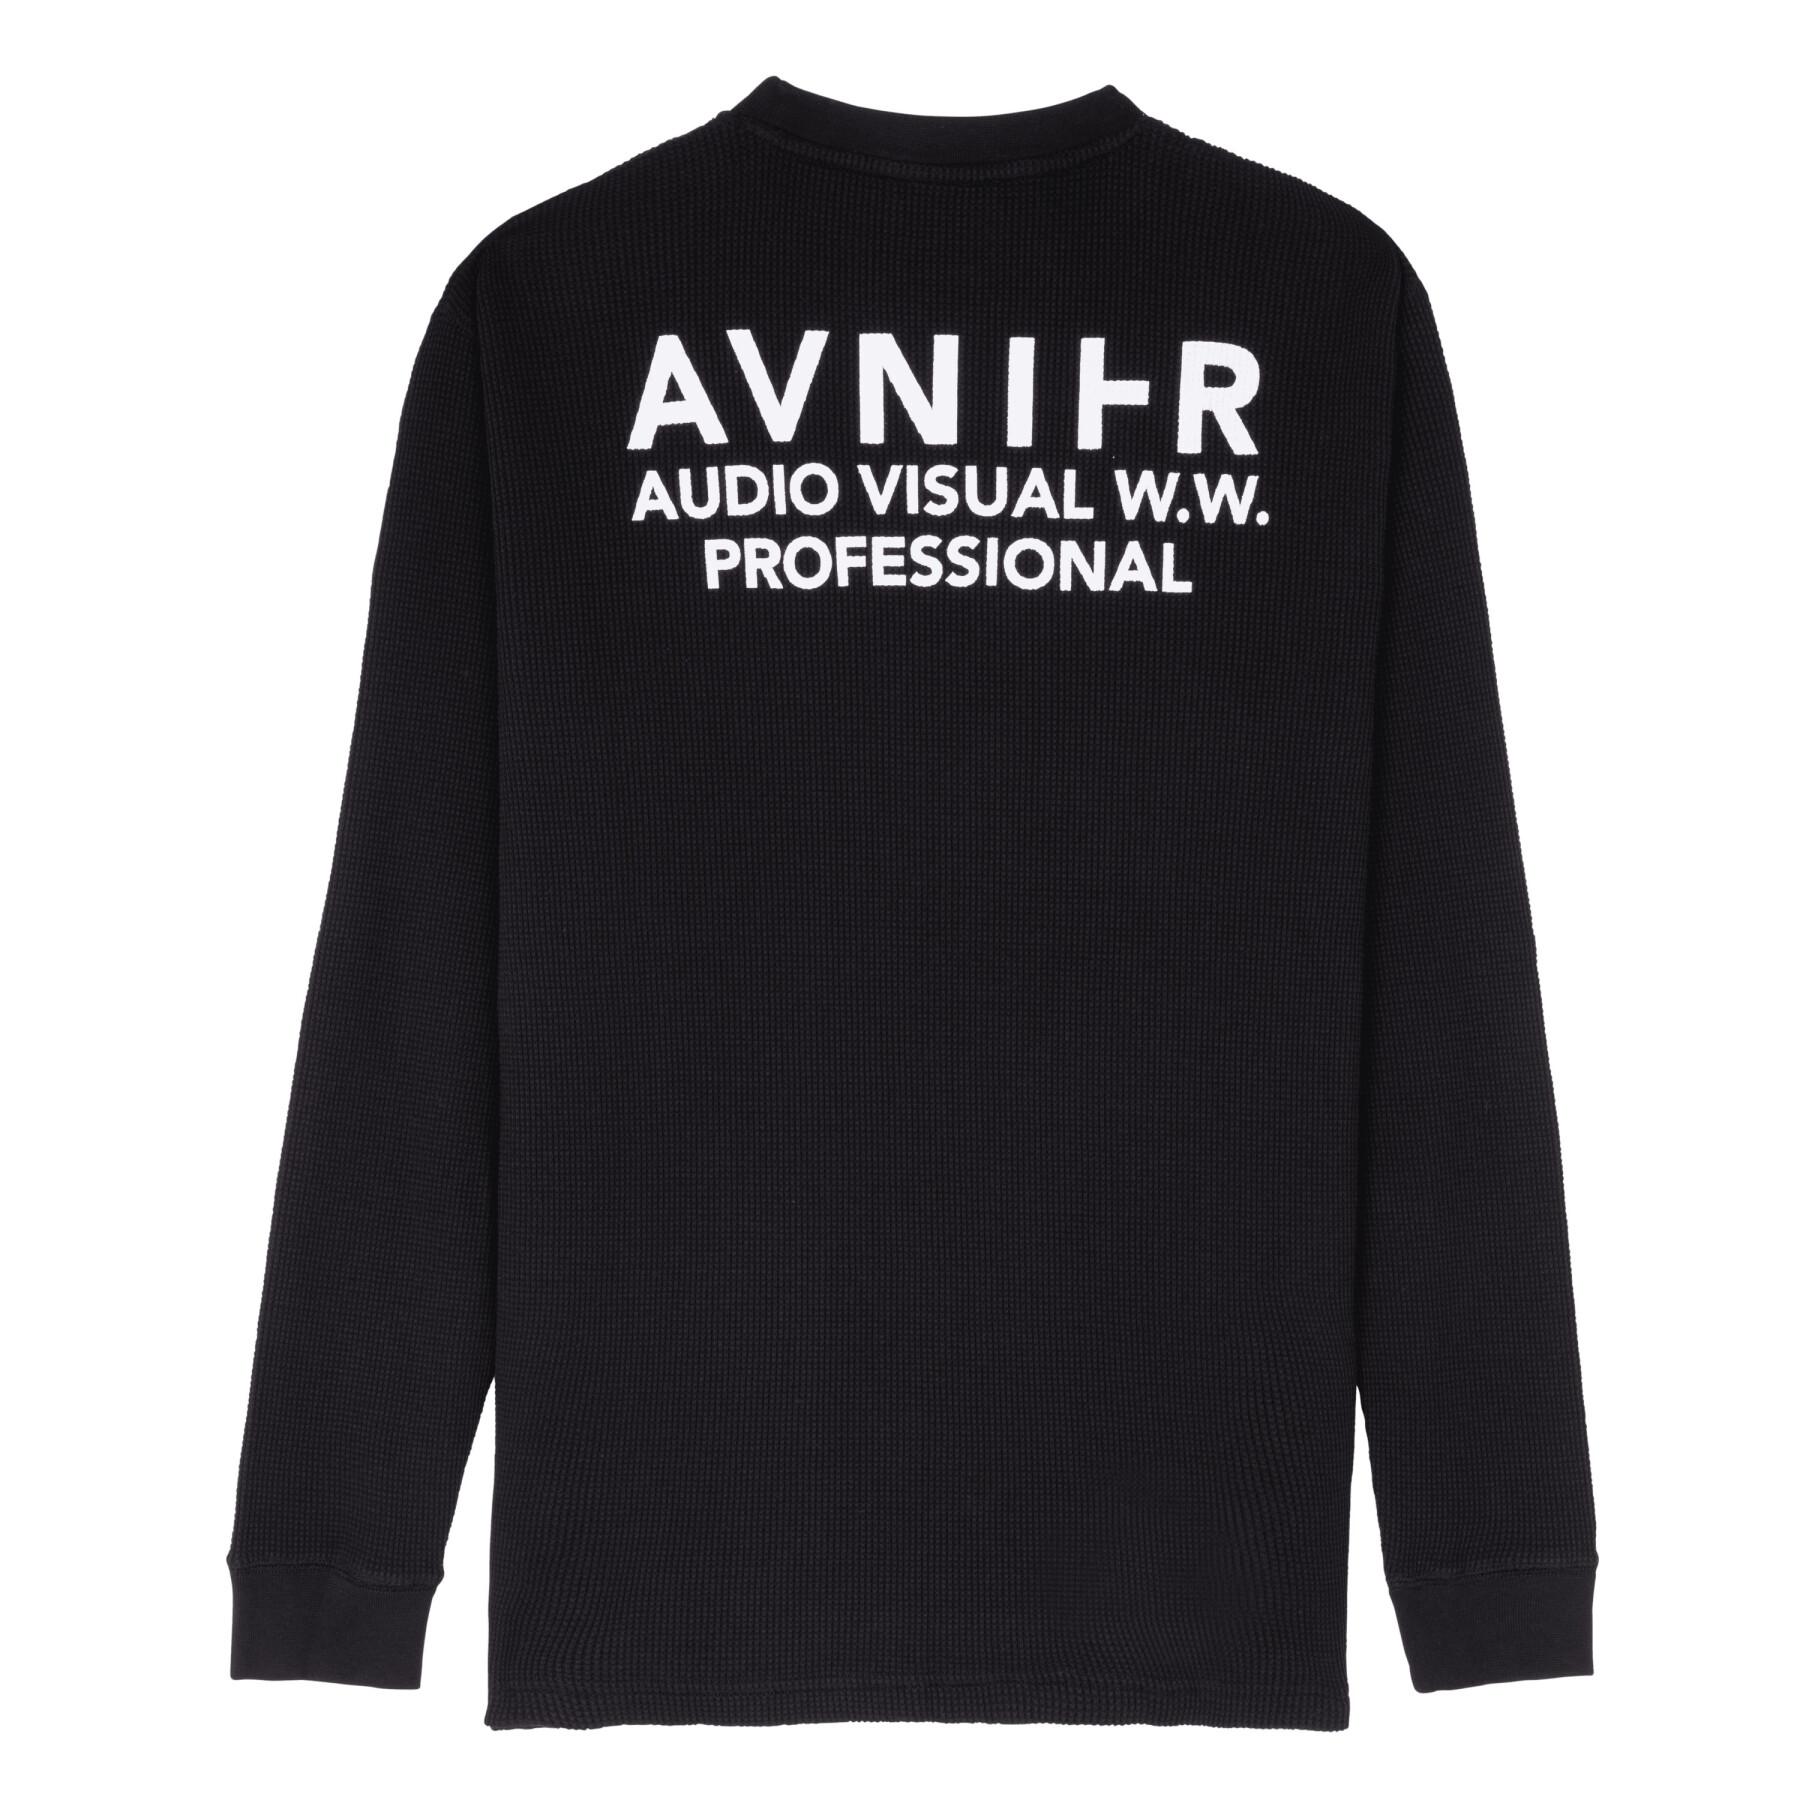 T-shirt met lange mouwen Avnier Structure Professional